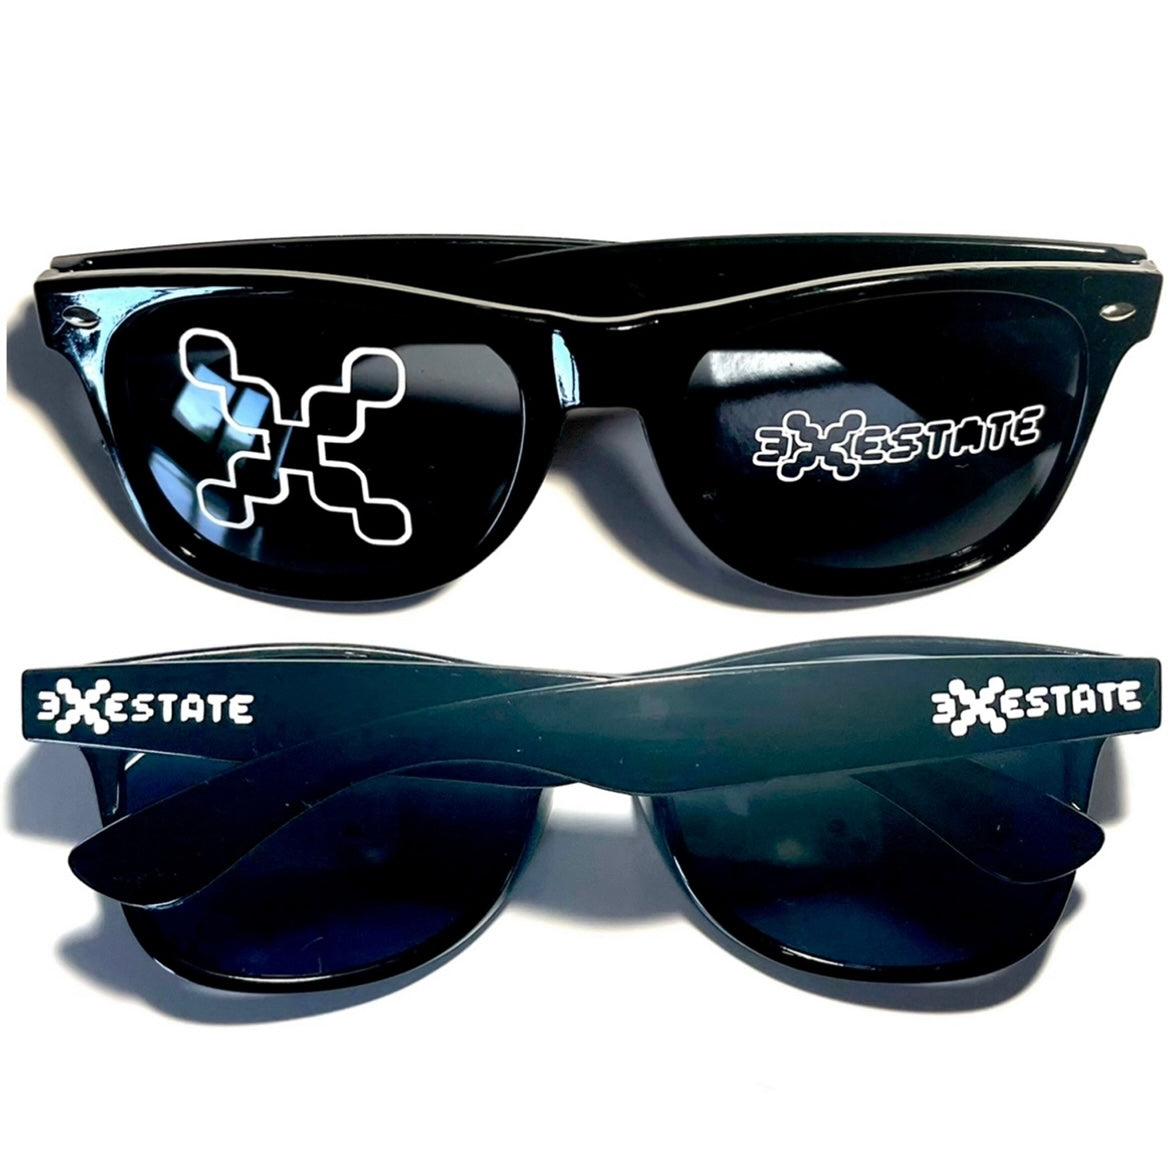 Exestate Recordings Sunglasses